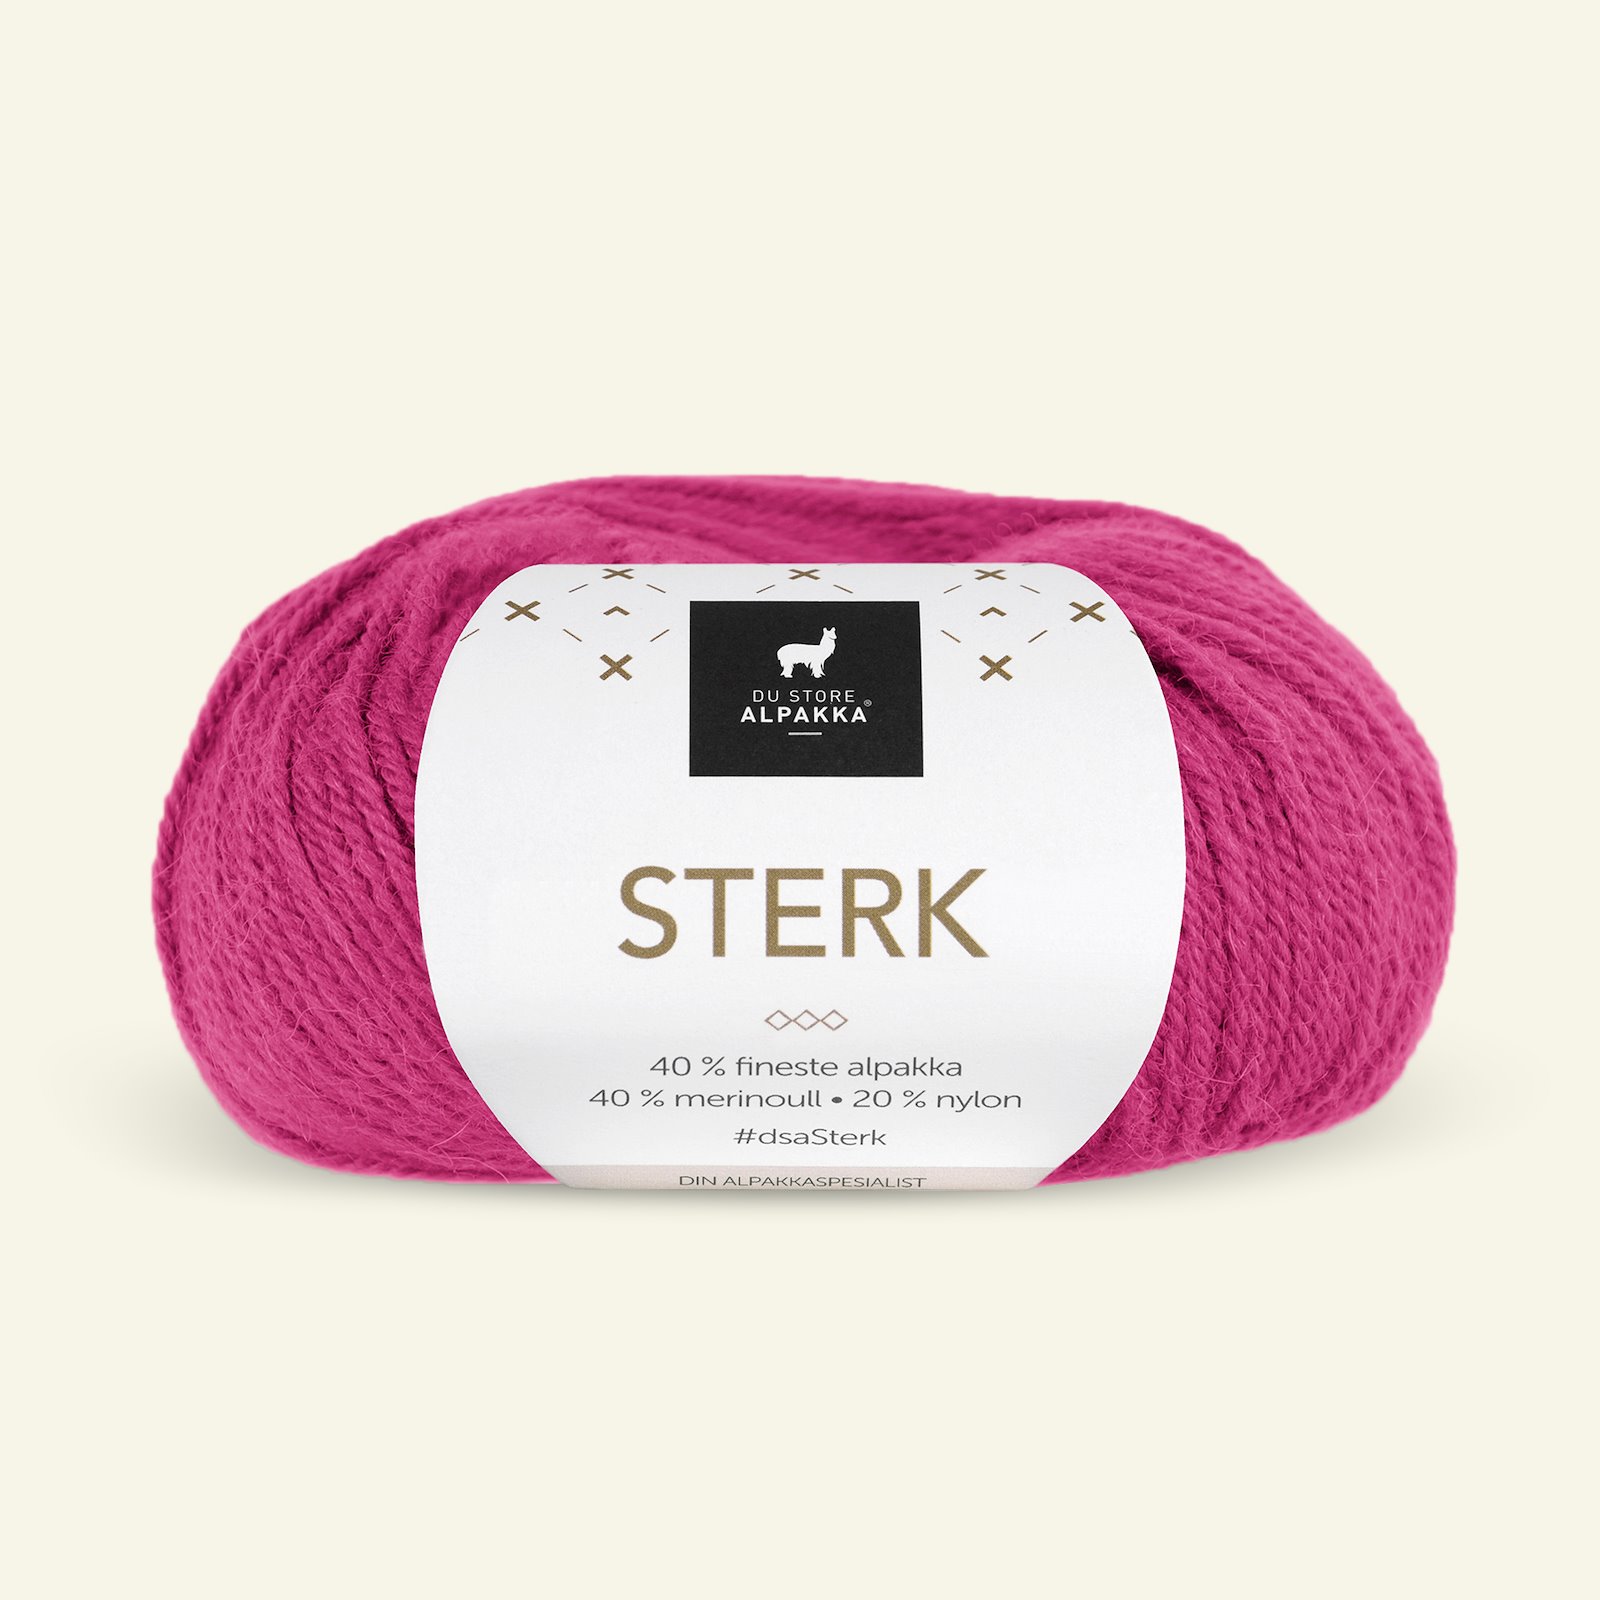 Du Store Alpakka, Alpaka merino Mischgarn "Sterk", pink (825) 90000666_pack